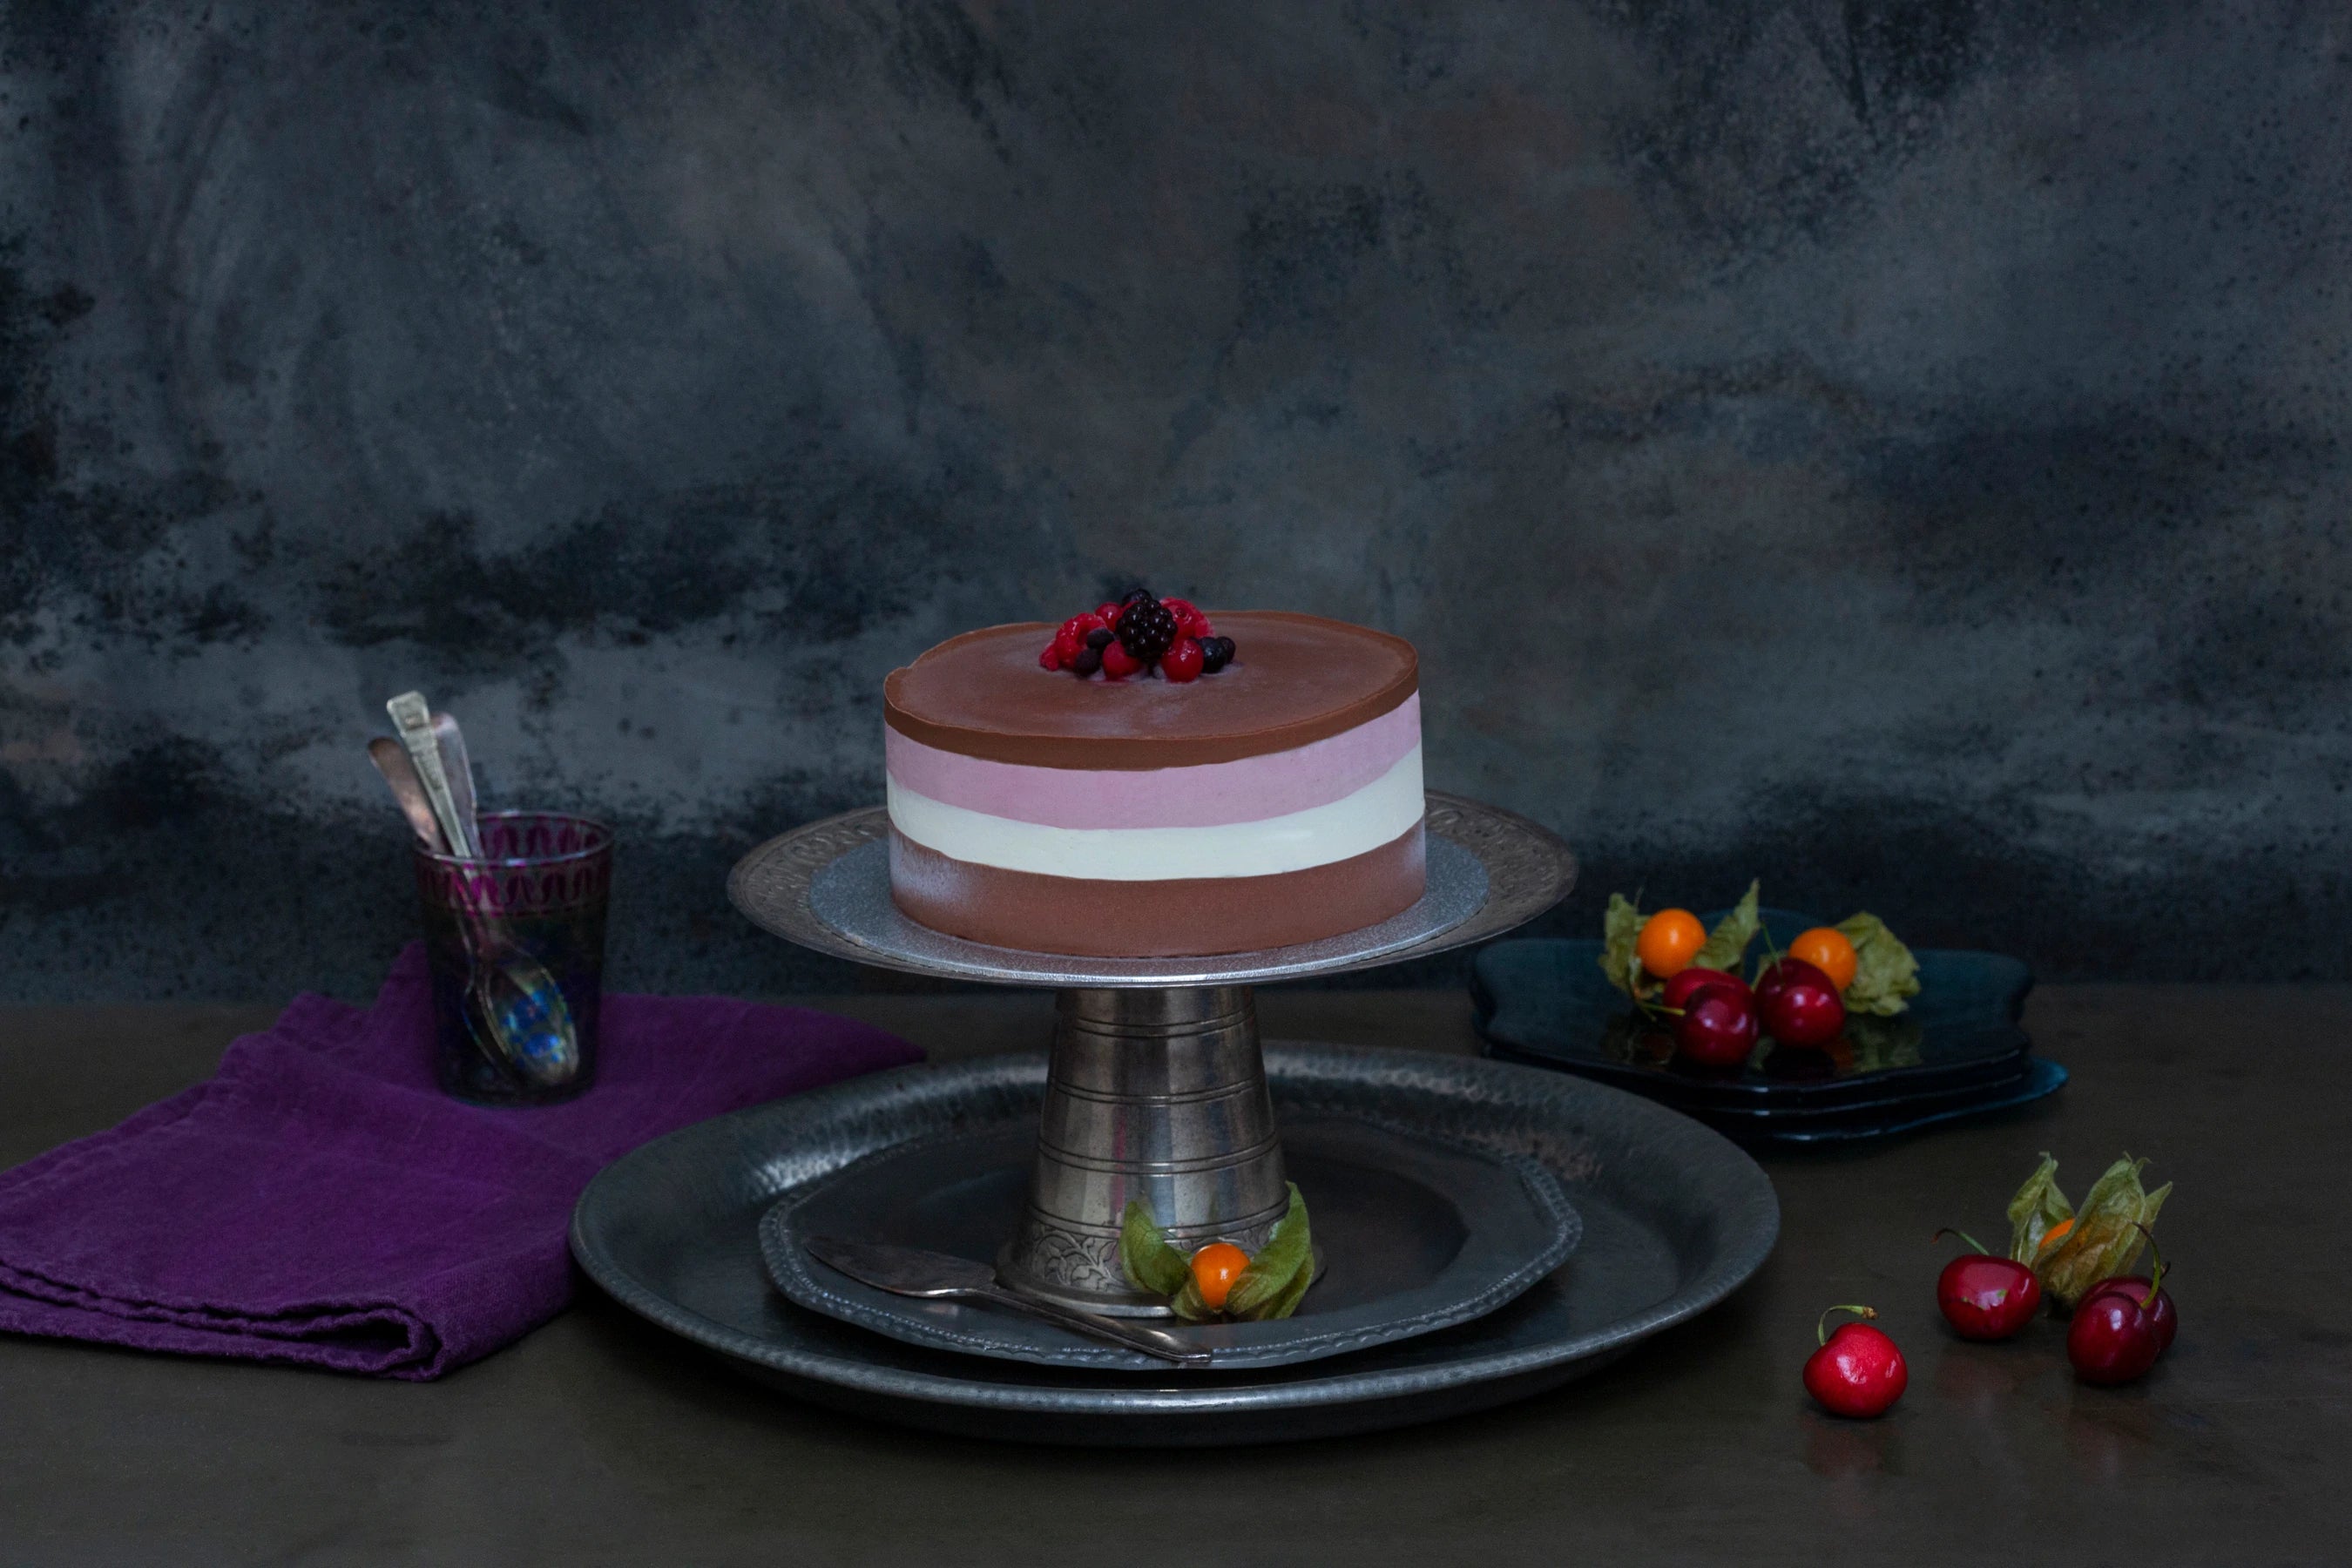 Handmade ice cream layer cake with three layers, chocolate ganache top and fruit decoration